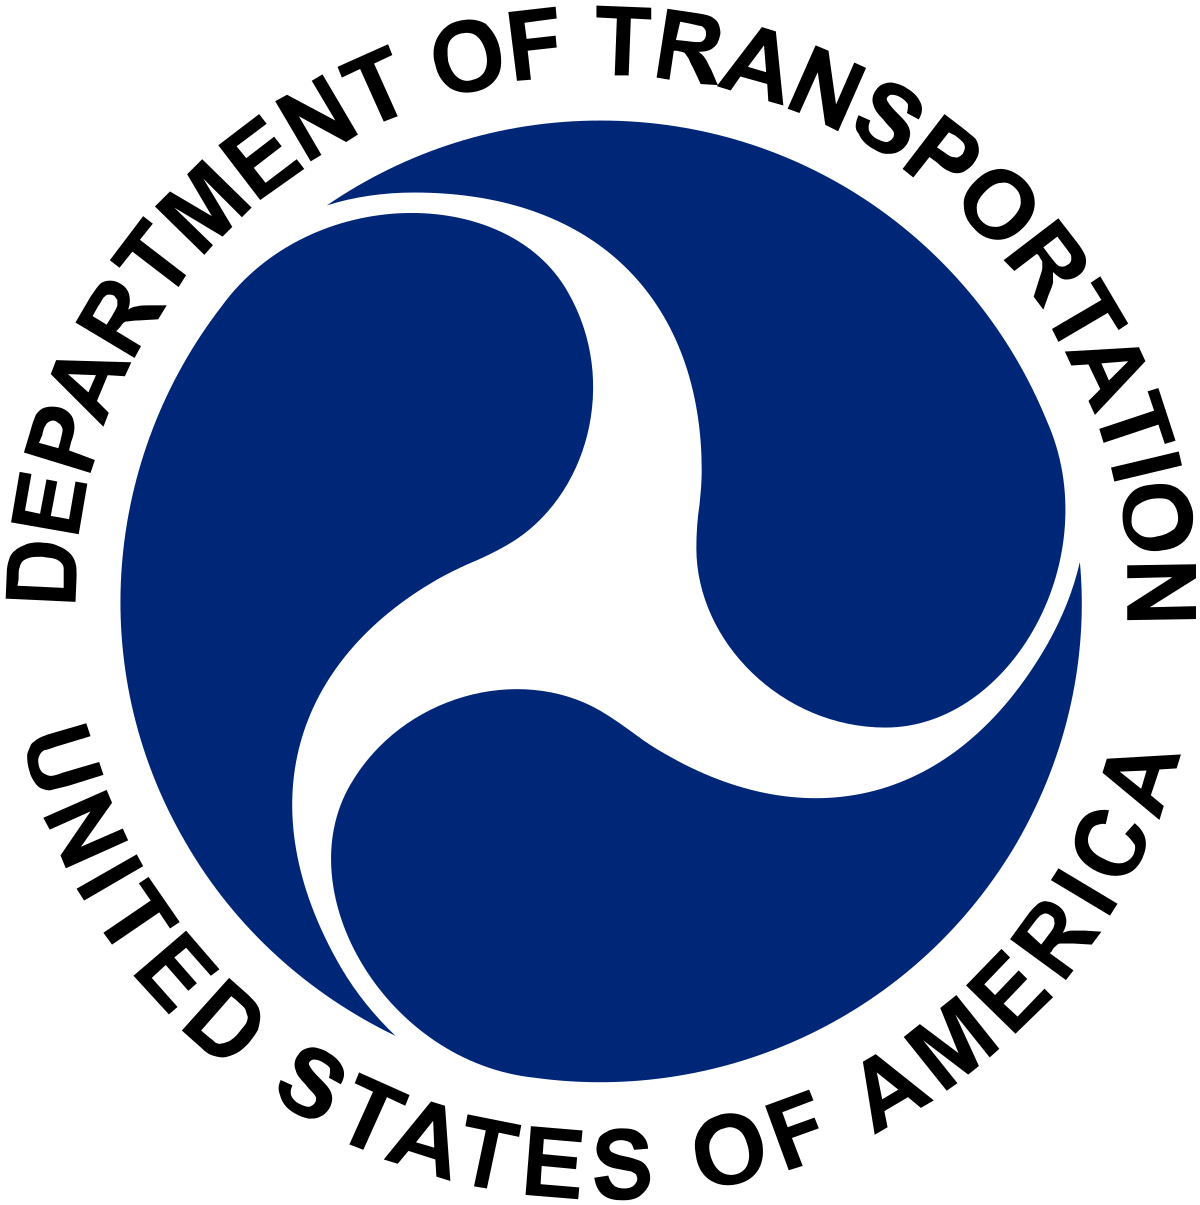 U.S. Department of Transportation logo